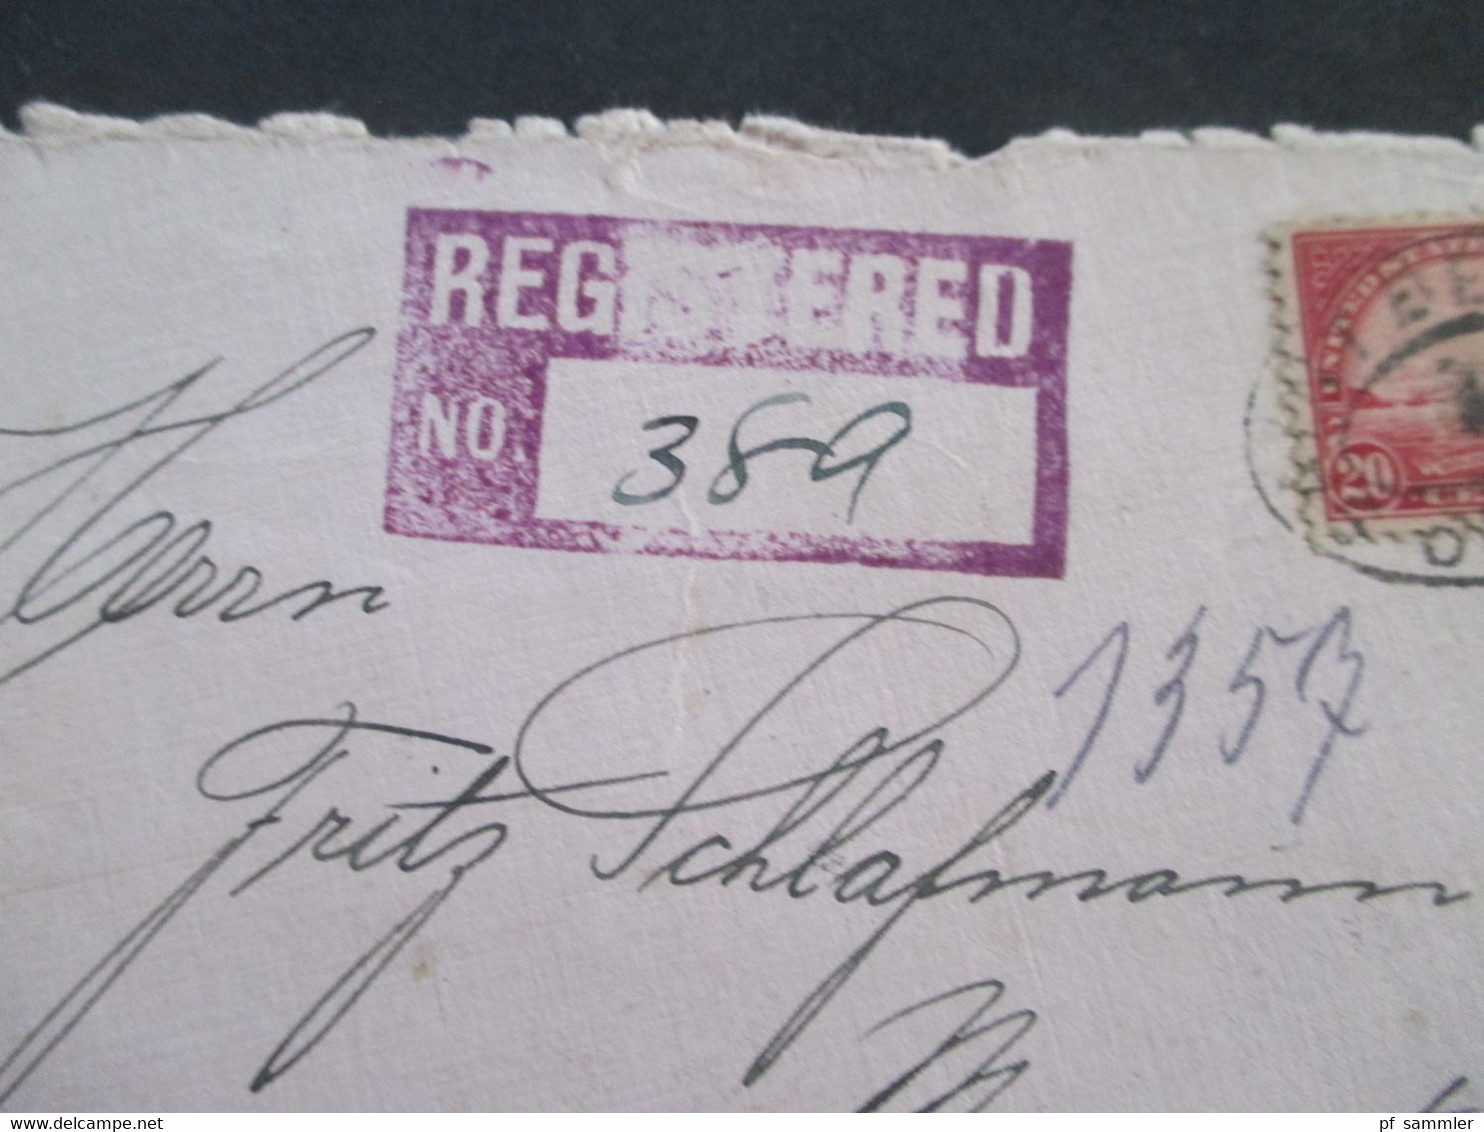 USA 1922 Nr. 279 EF Verwendet 1926 Registered Letter über Cöln Nach Pirmasens Rückseitig 7 Stempel SST Pirmasens - Lettres & Documents